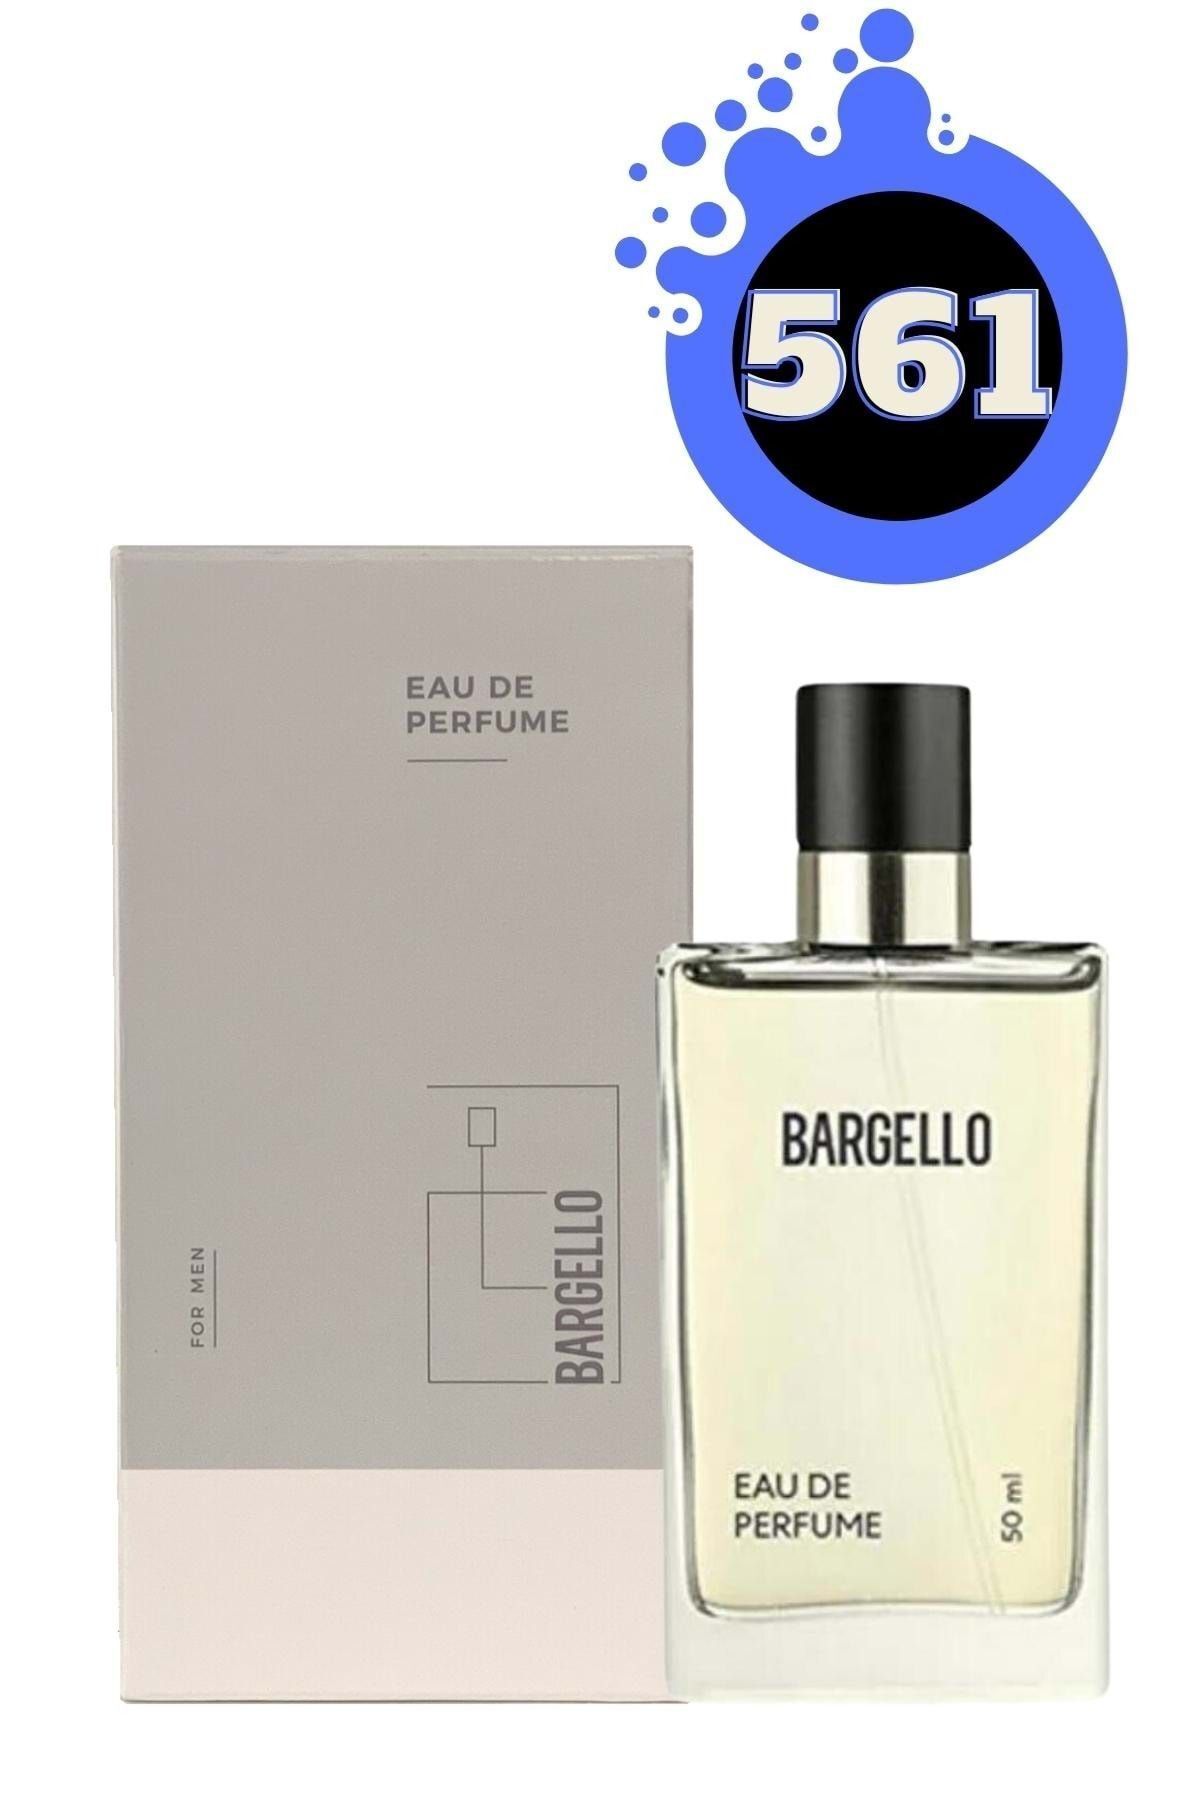 Bargello 561 Erkek Parfüm Fresh Edp 50 ml